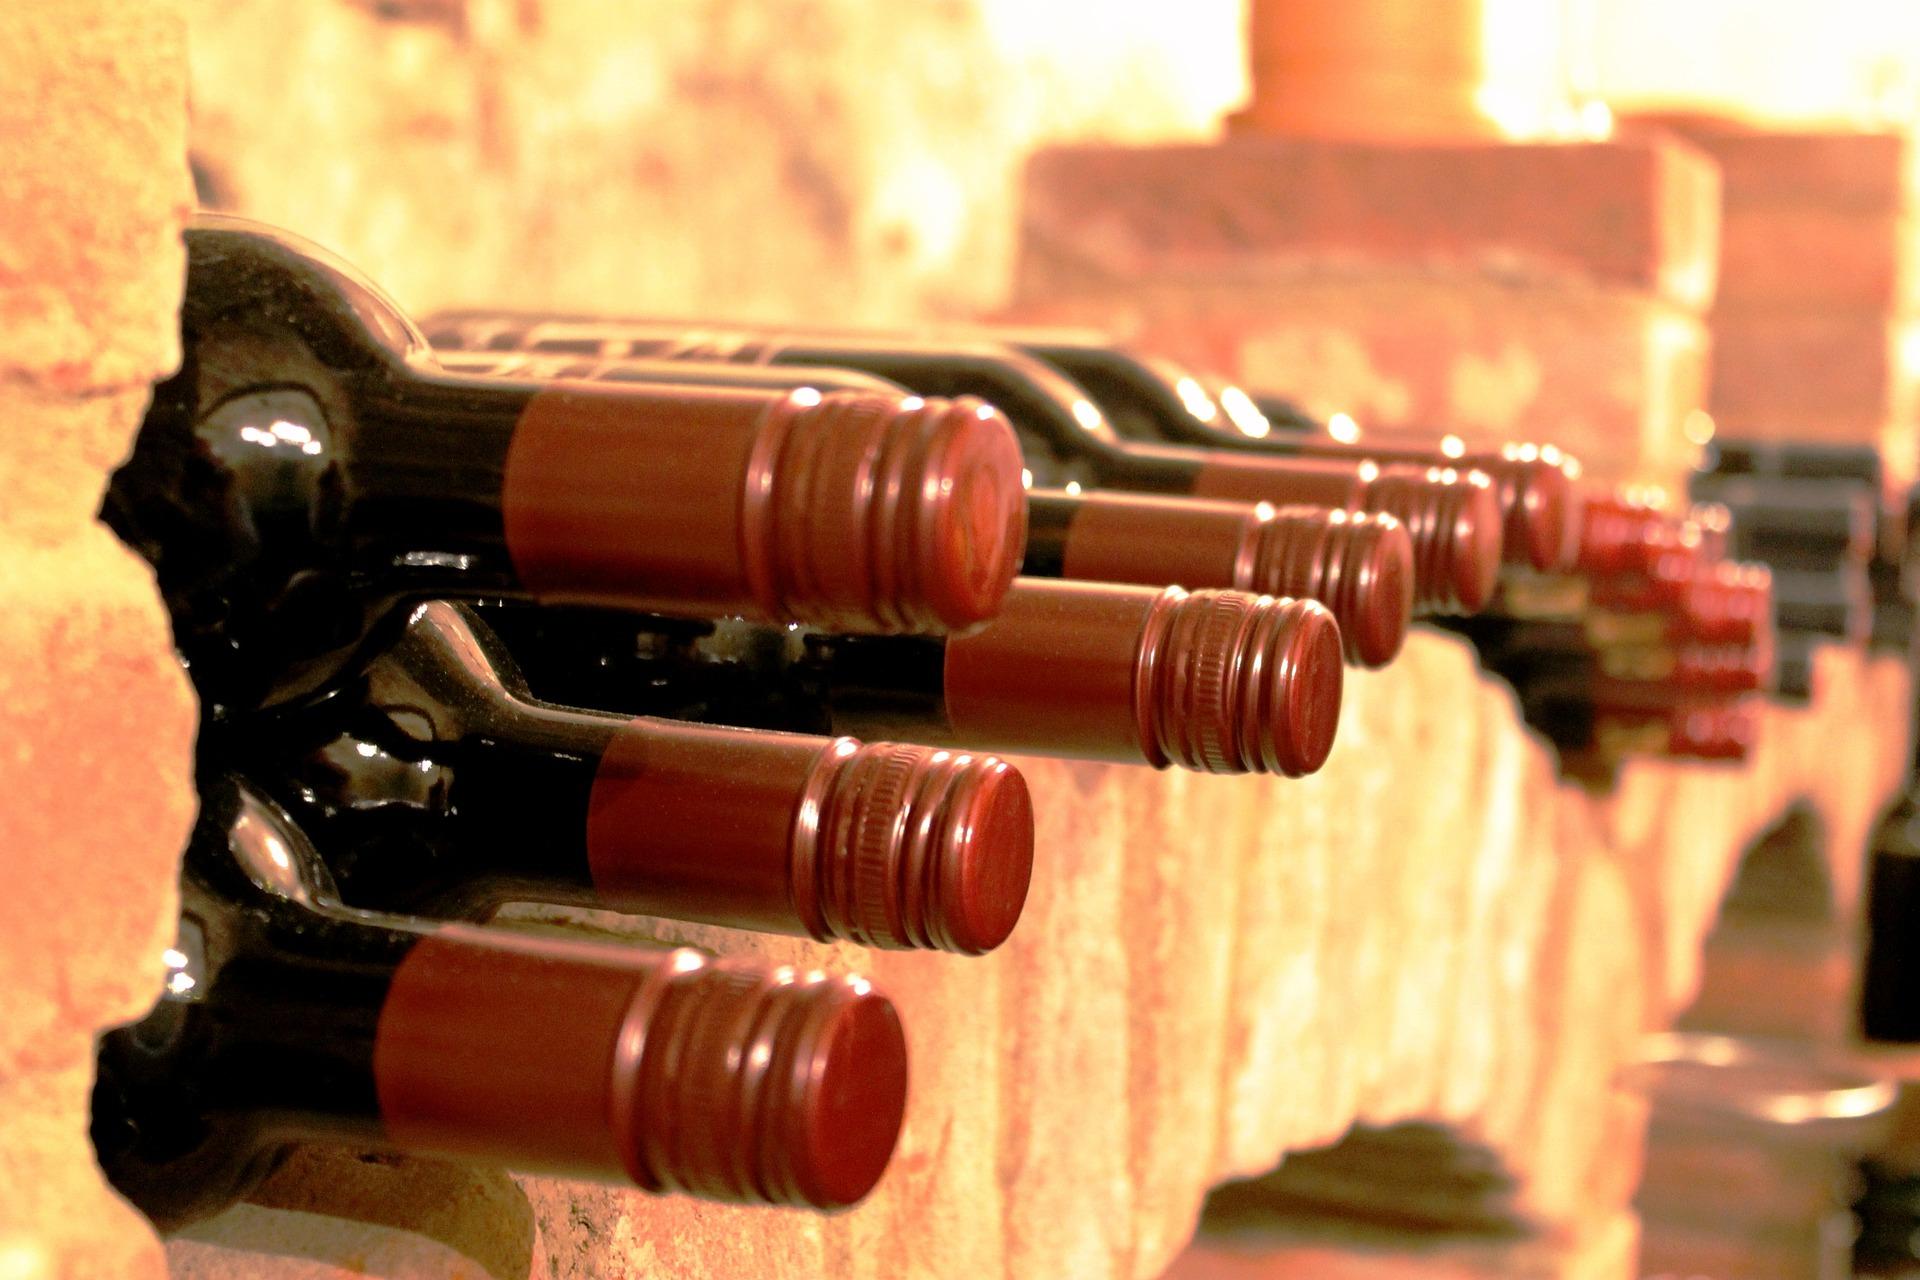 High street wine retailer Oddbins enters administration